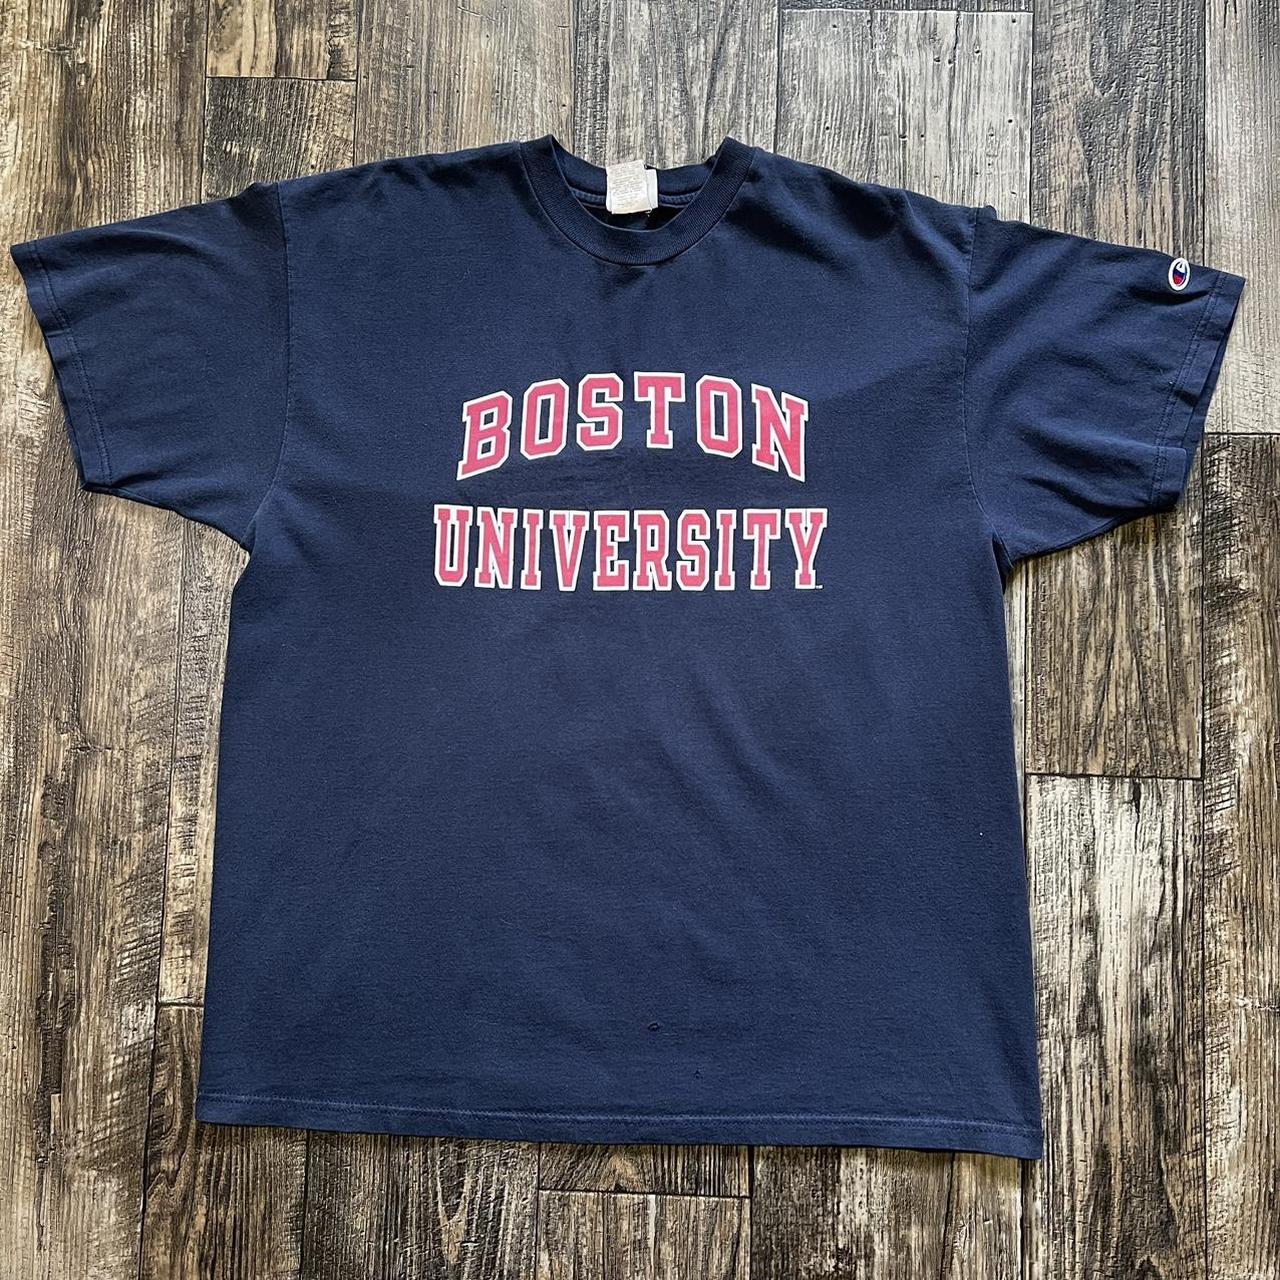 Boston University Vintage 